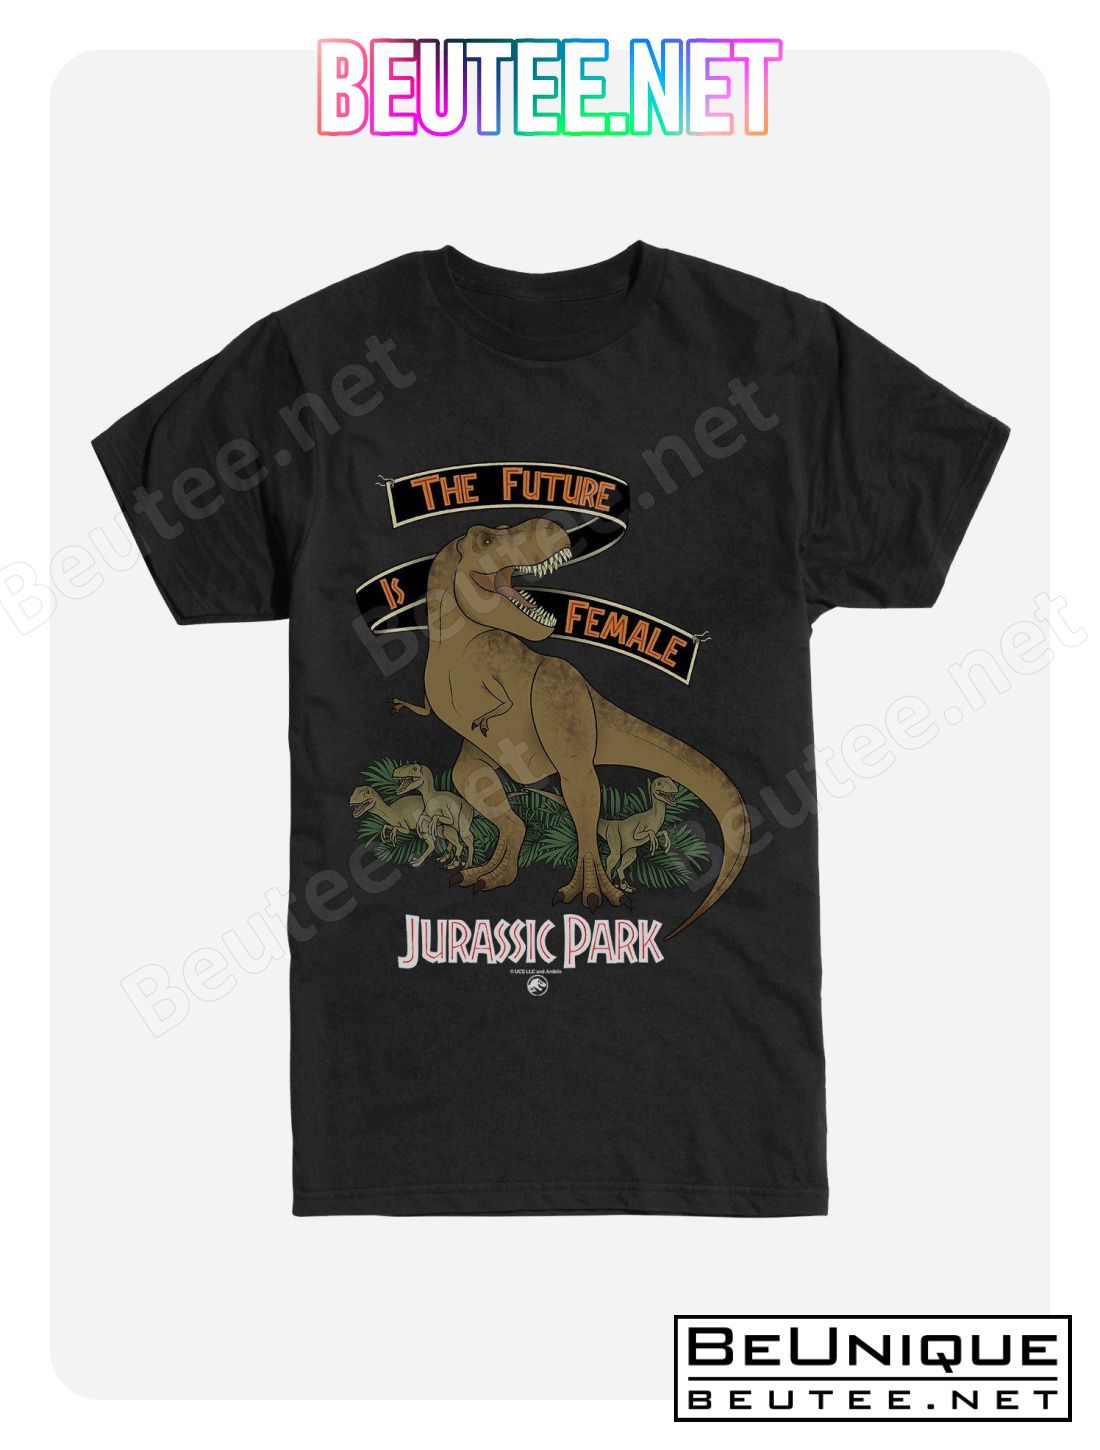 Jurassic Park The Future Is Female White T-Shirt